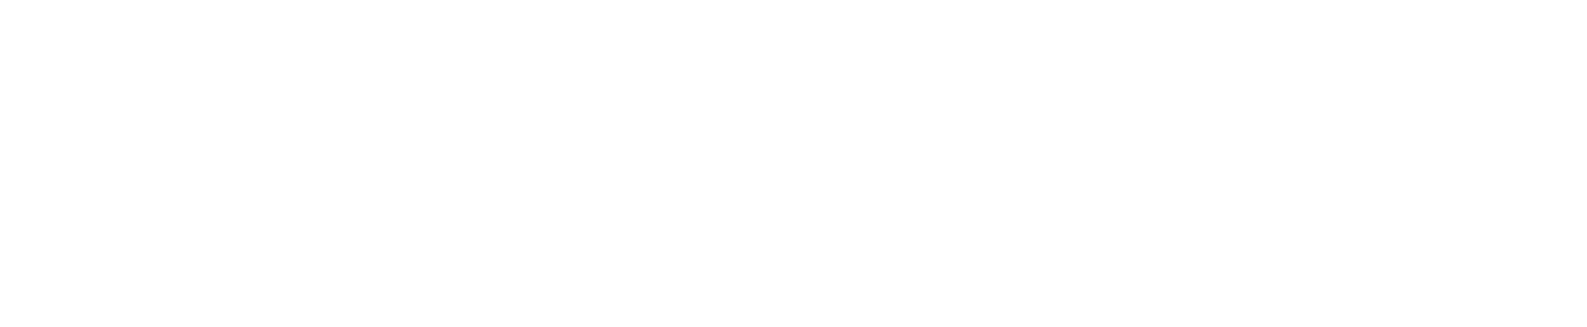 National Grid Logo groß für dunkle Hintergründe (transparentes PNG)